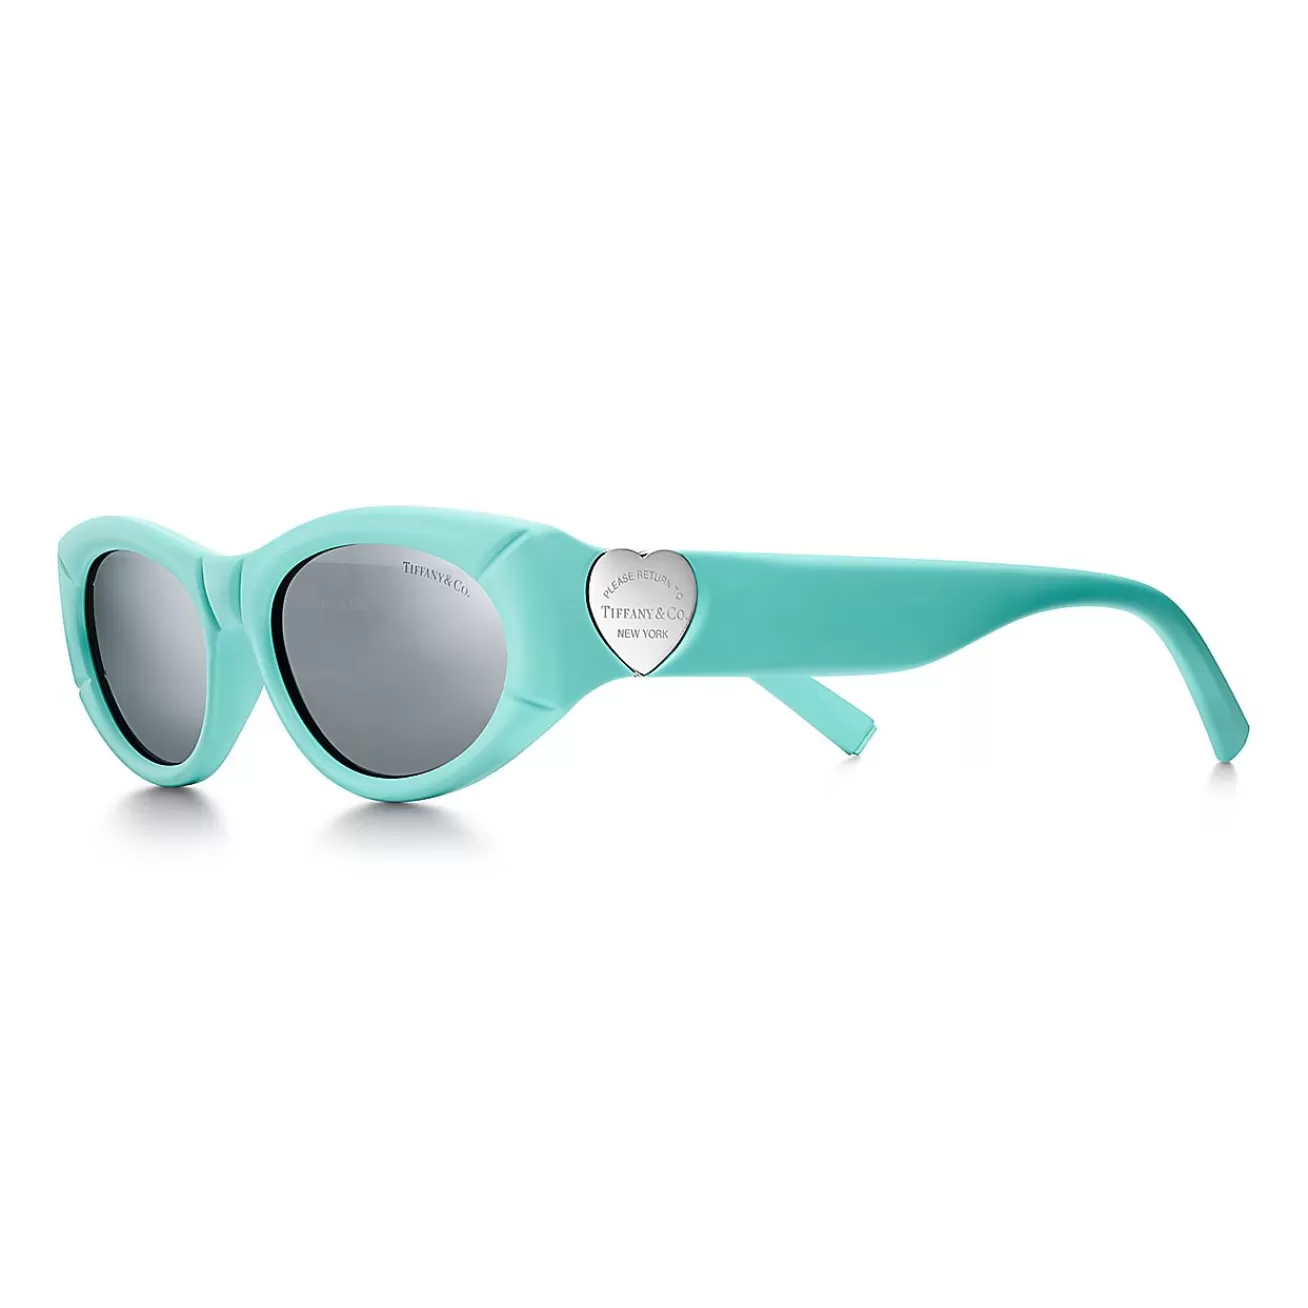 Tiffany & Co. Return to Tiffany® Sunglasses in Tiffany Blue® Acetate and Gray Mirrored Lenses | ^Women Return to Tiffany® | Sunglasses